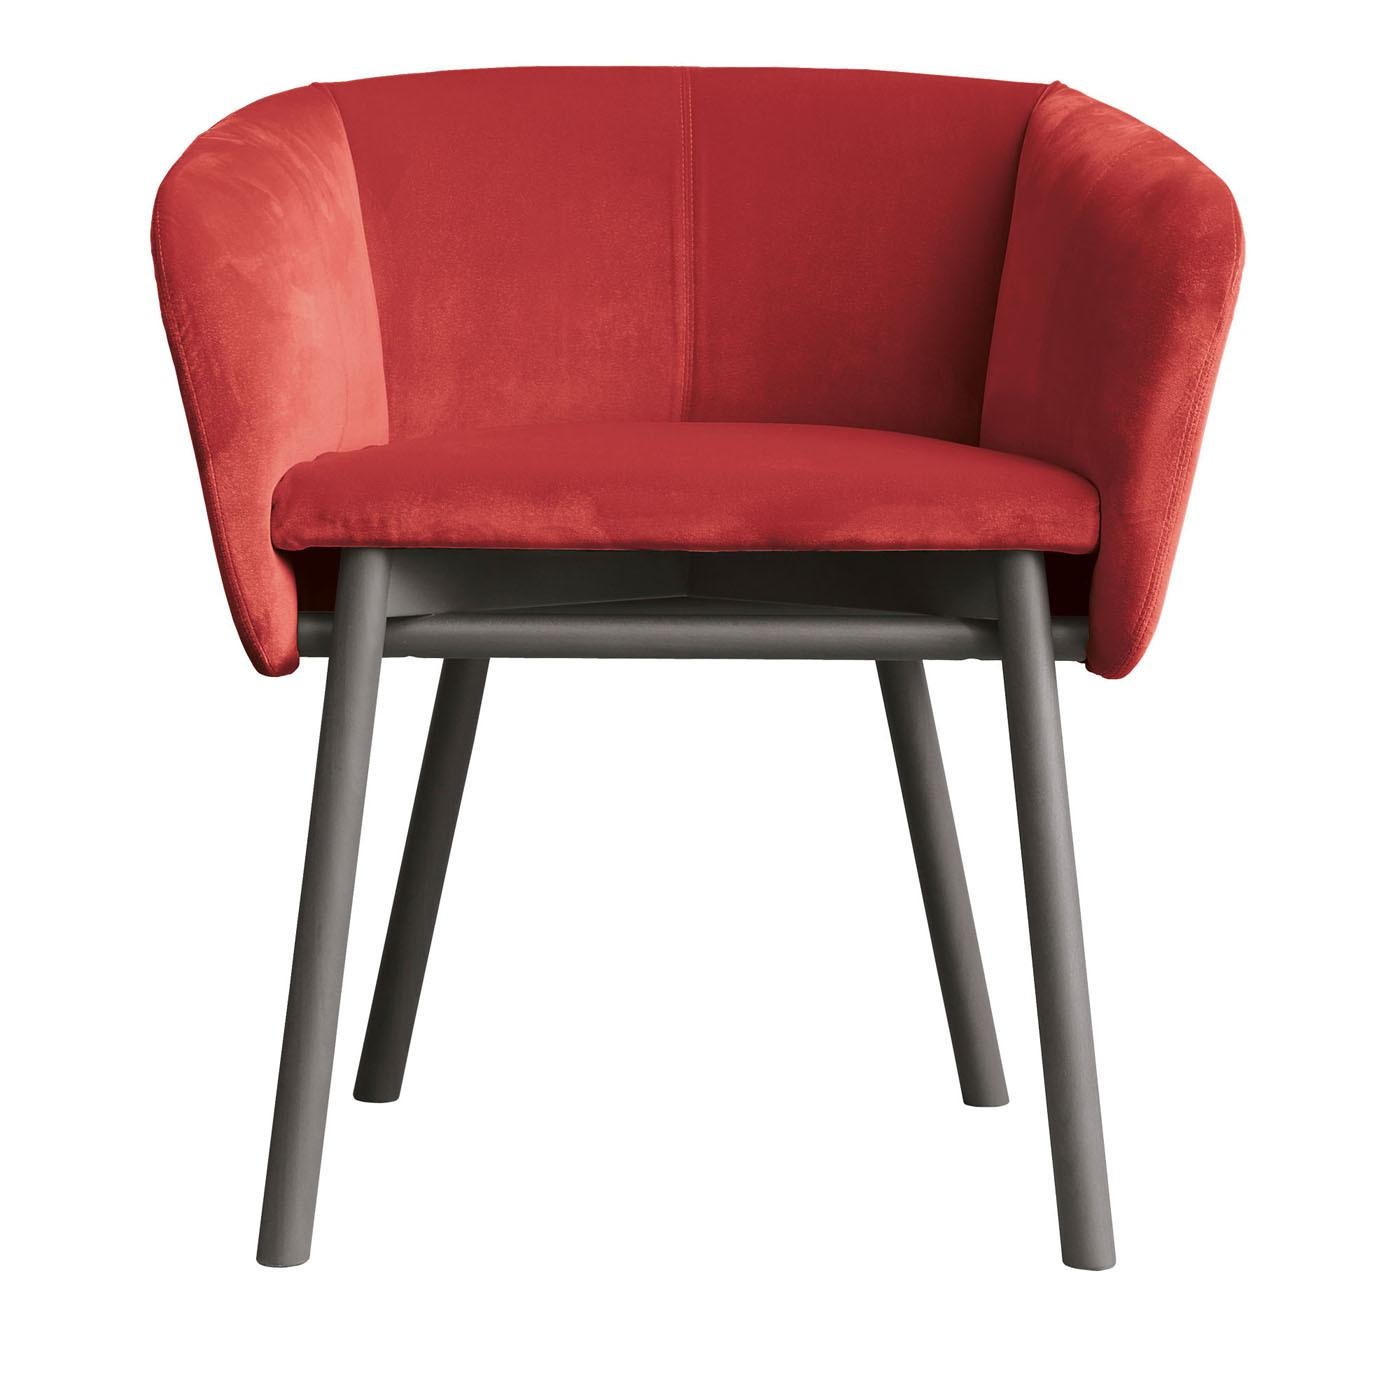 Italian Balù Red Chair by Emilio Nanni For Sale